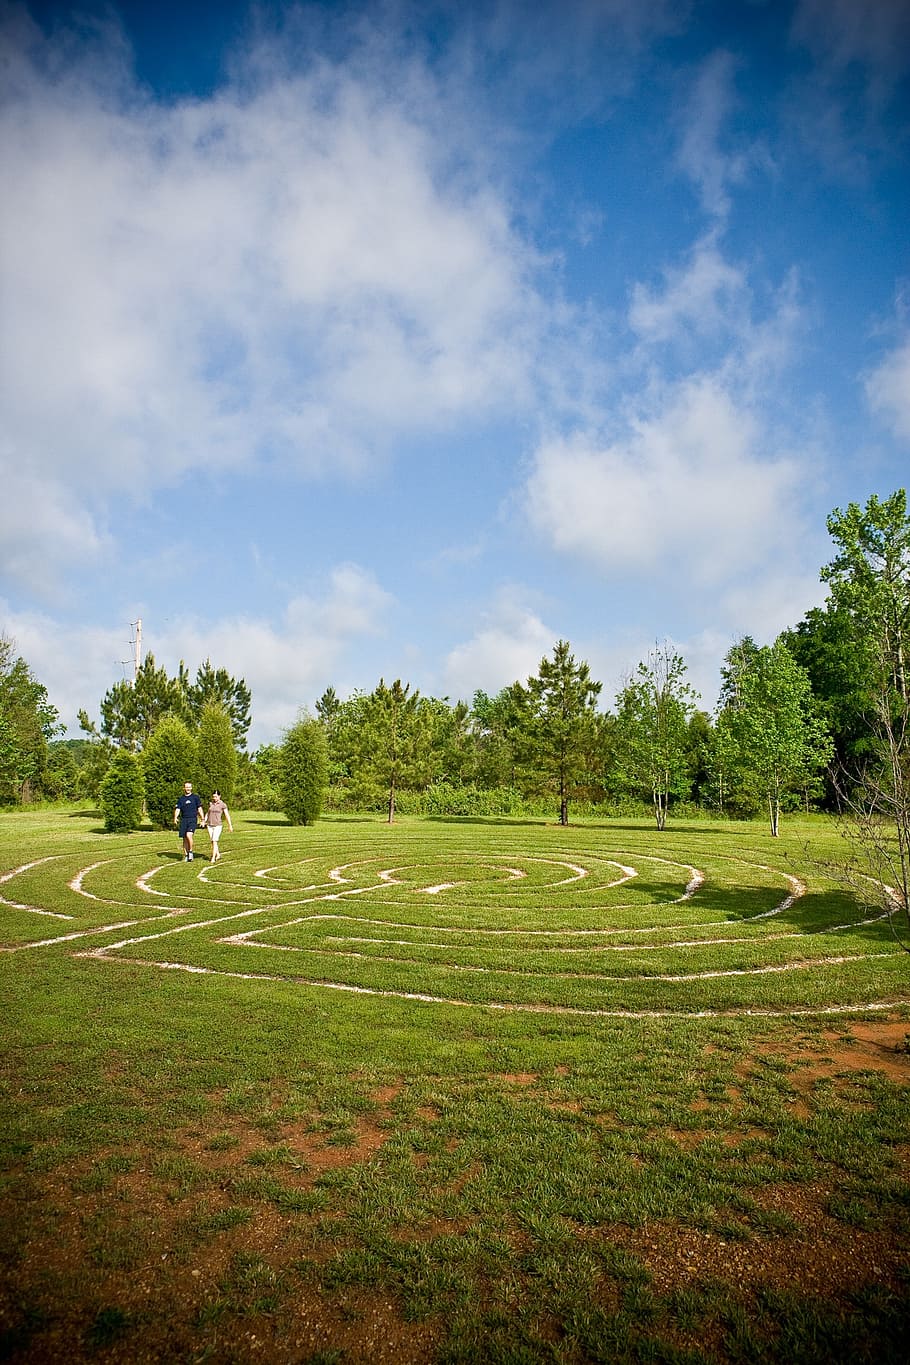 mandala, maze, labyrinth, outdoor, couple, walking, grass, green, sky, blue